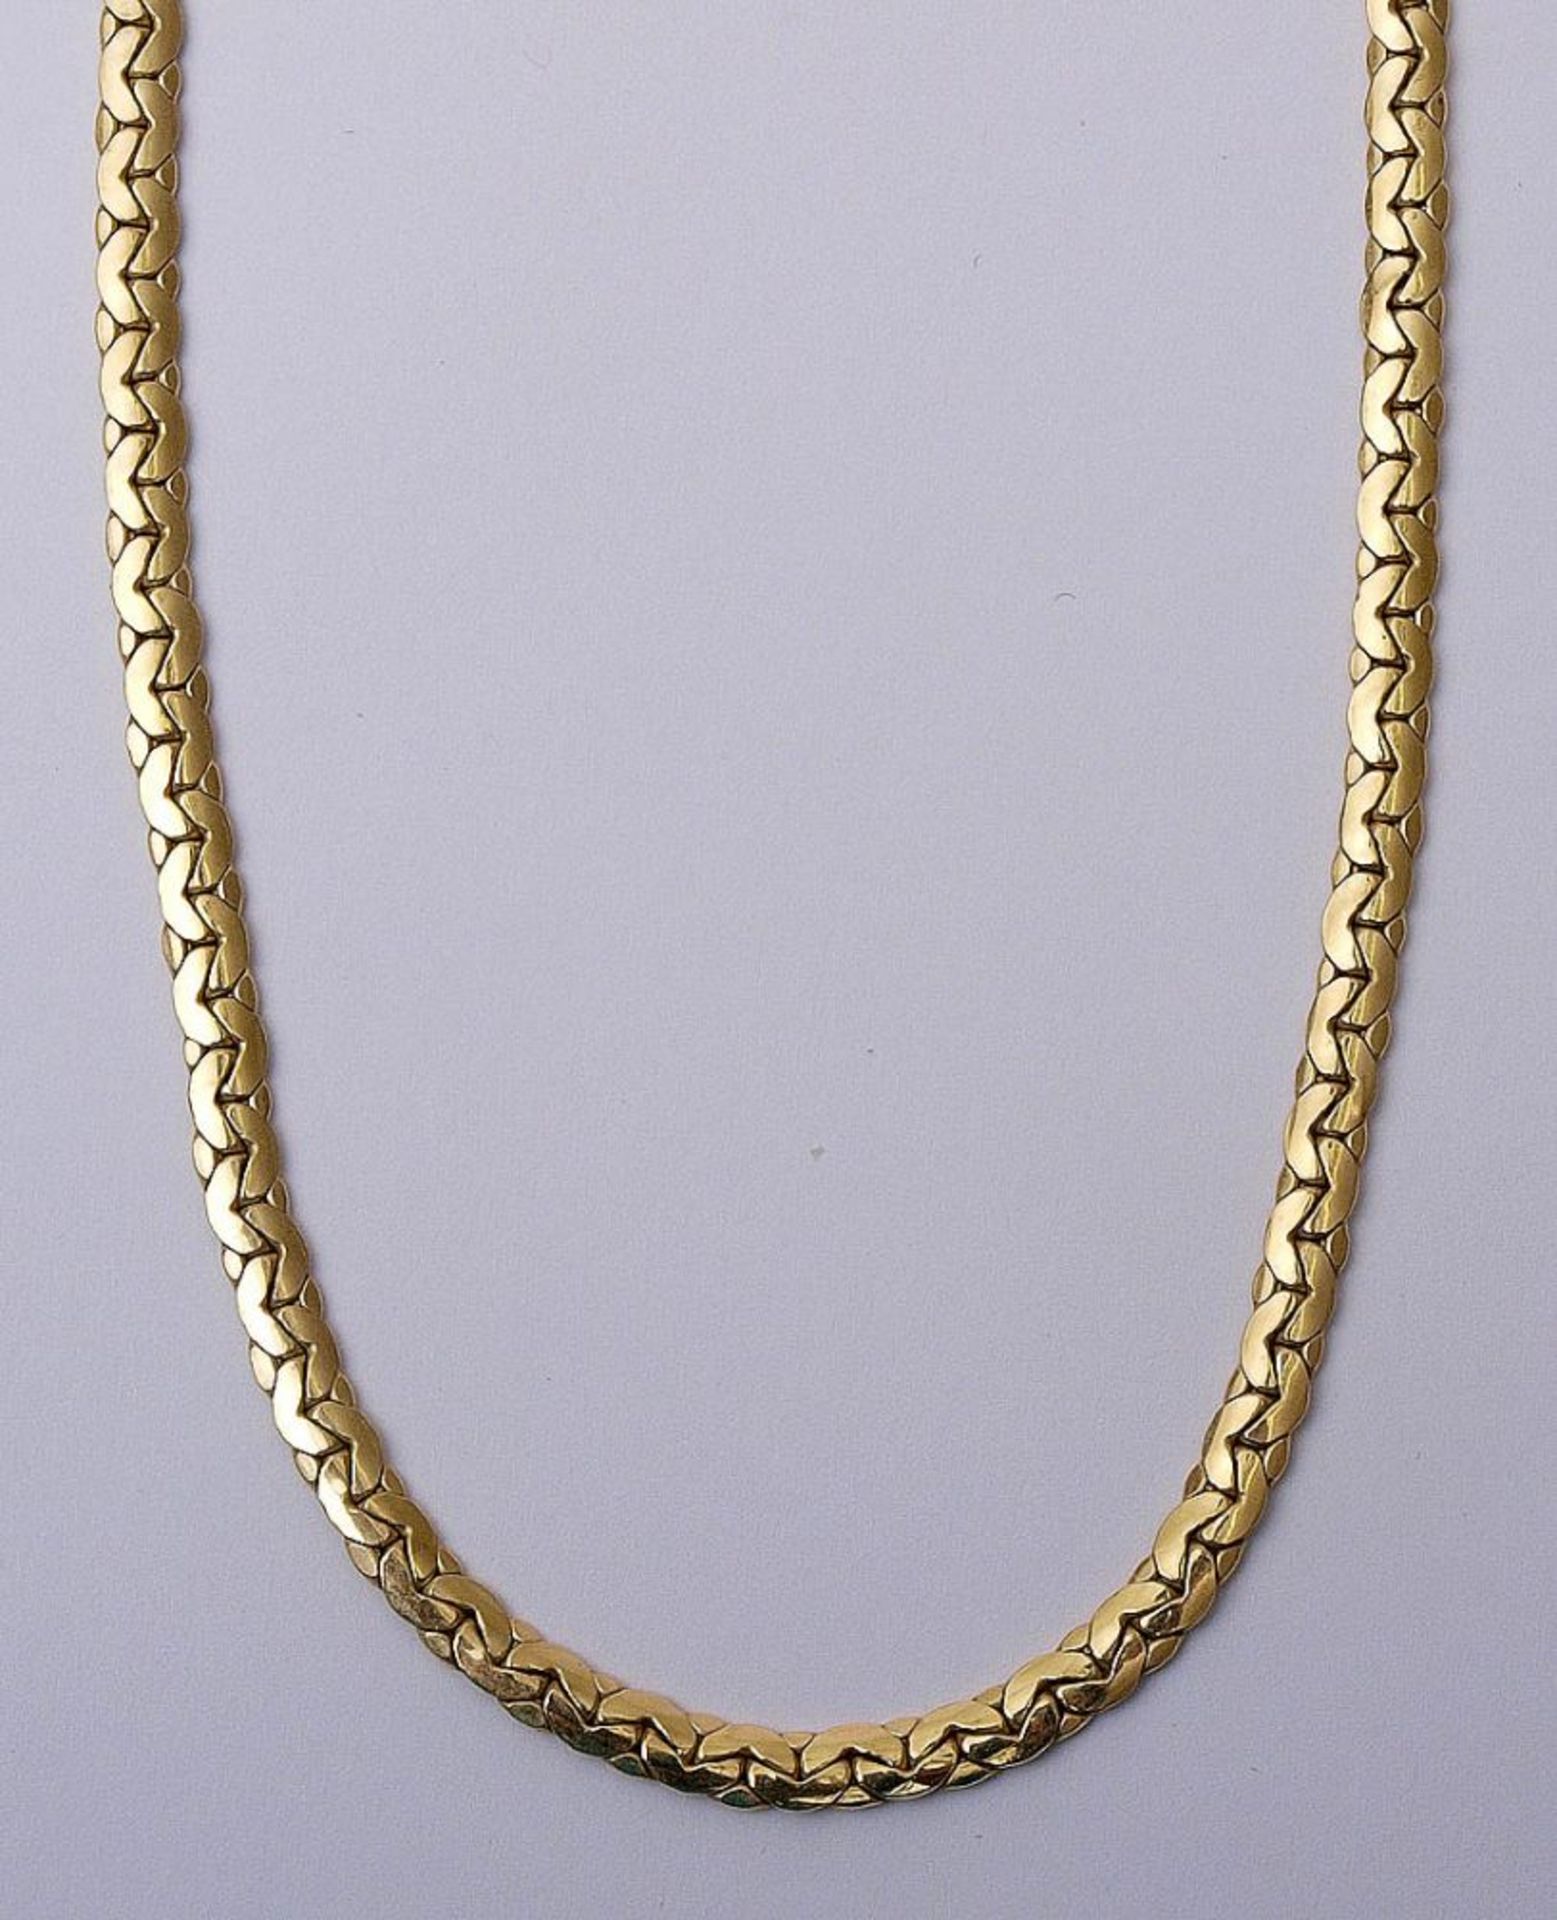 Halskette GG 8kt. Doppelachtförmige Kettenglieder. L.46cm, Gew. ca. 8g.    Aufrufpreis: 60